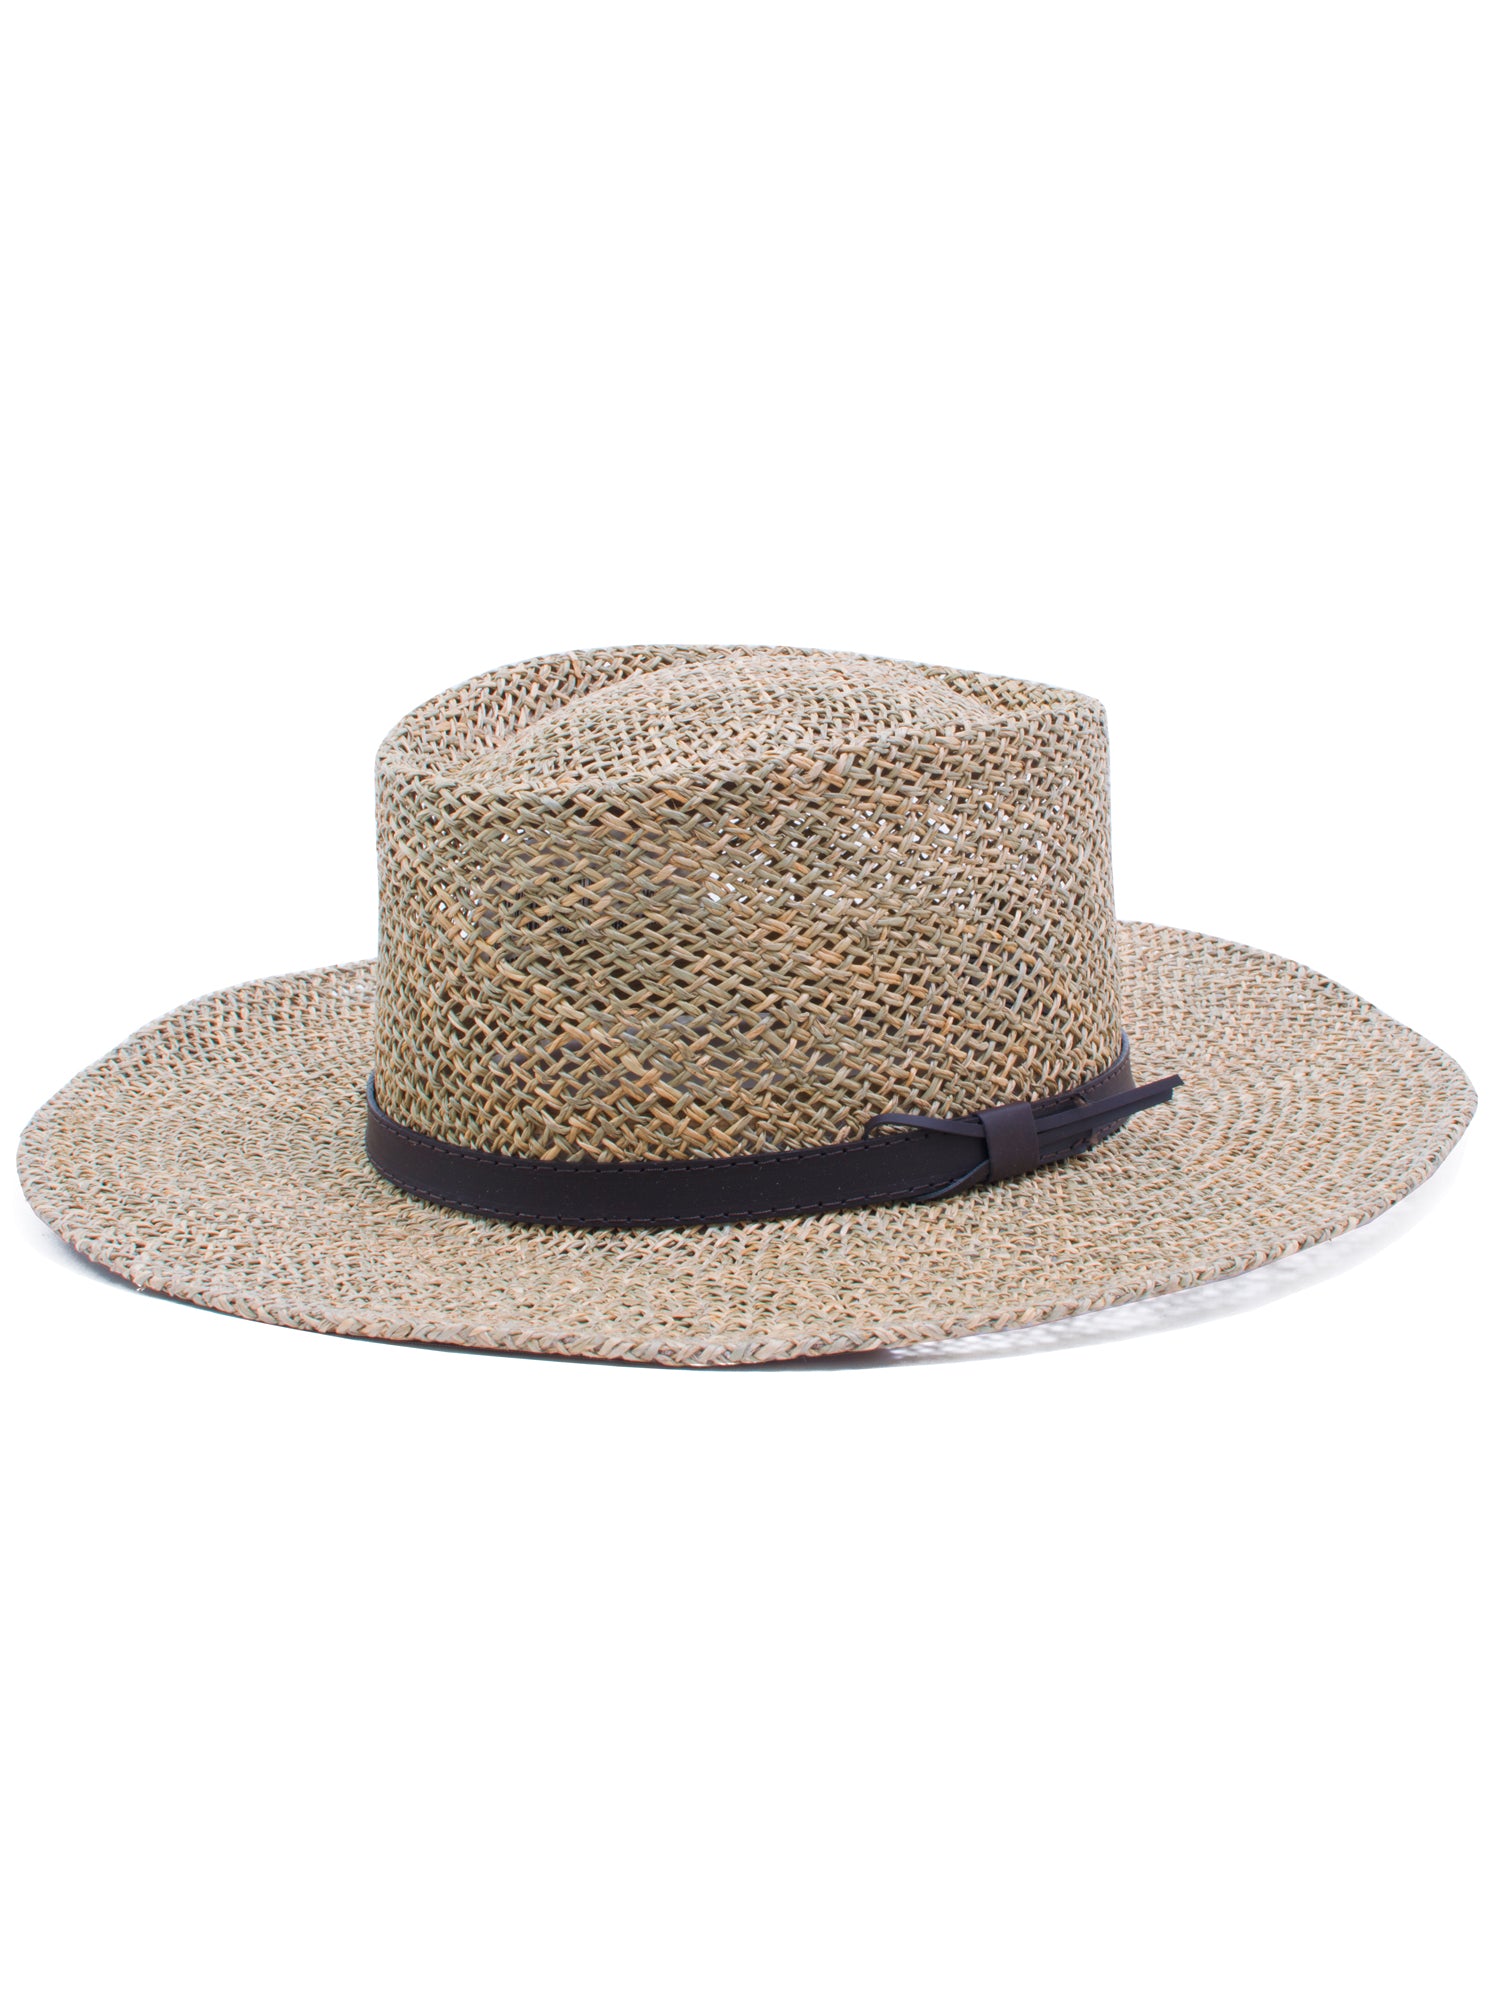 Stetson Men's Straw Gambler Hat